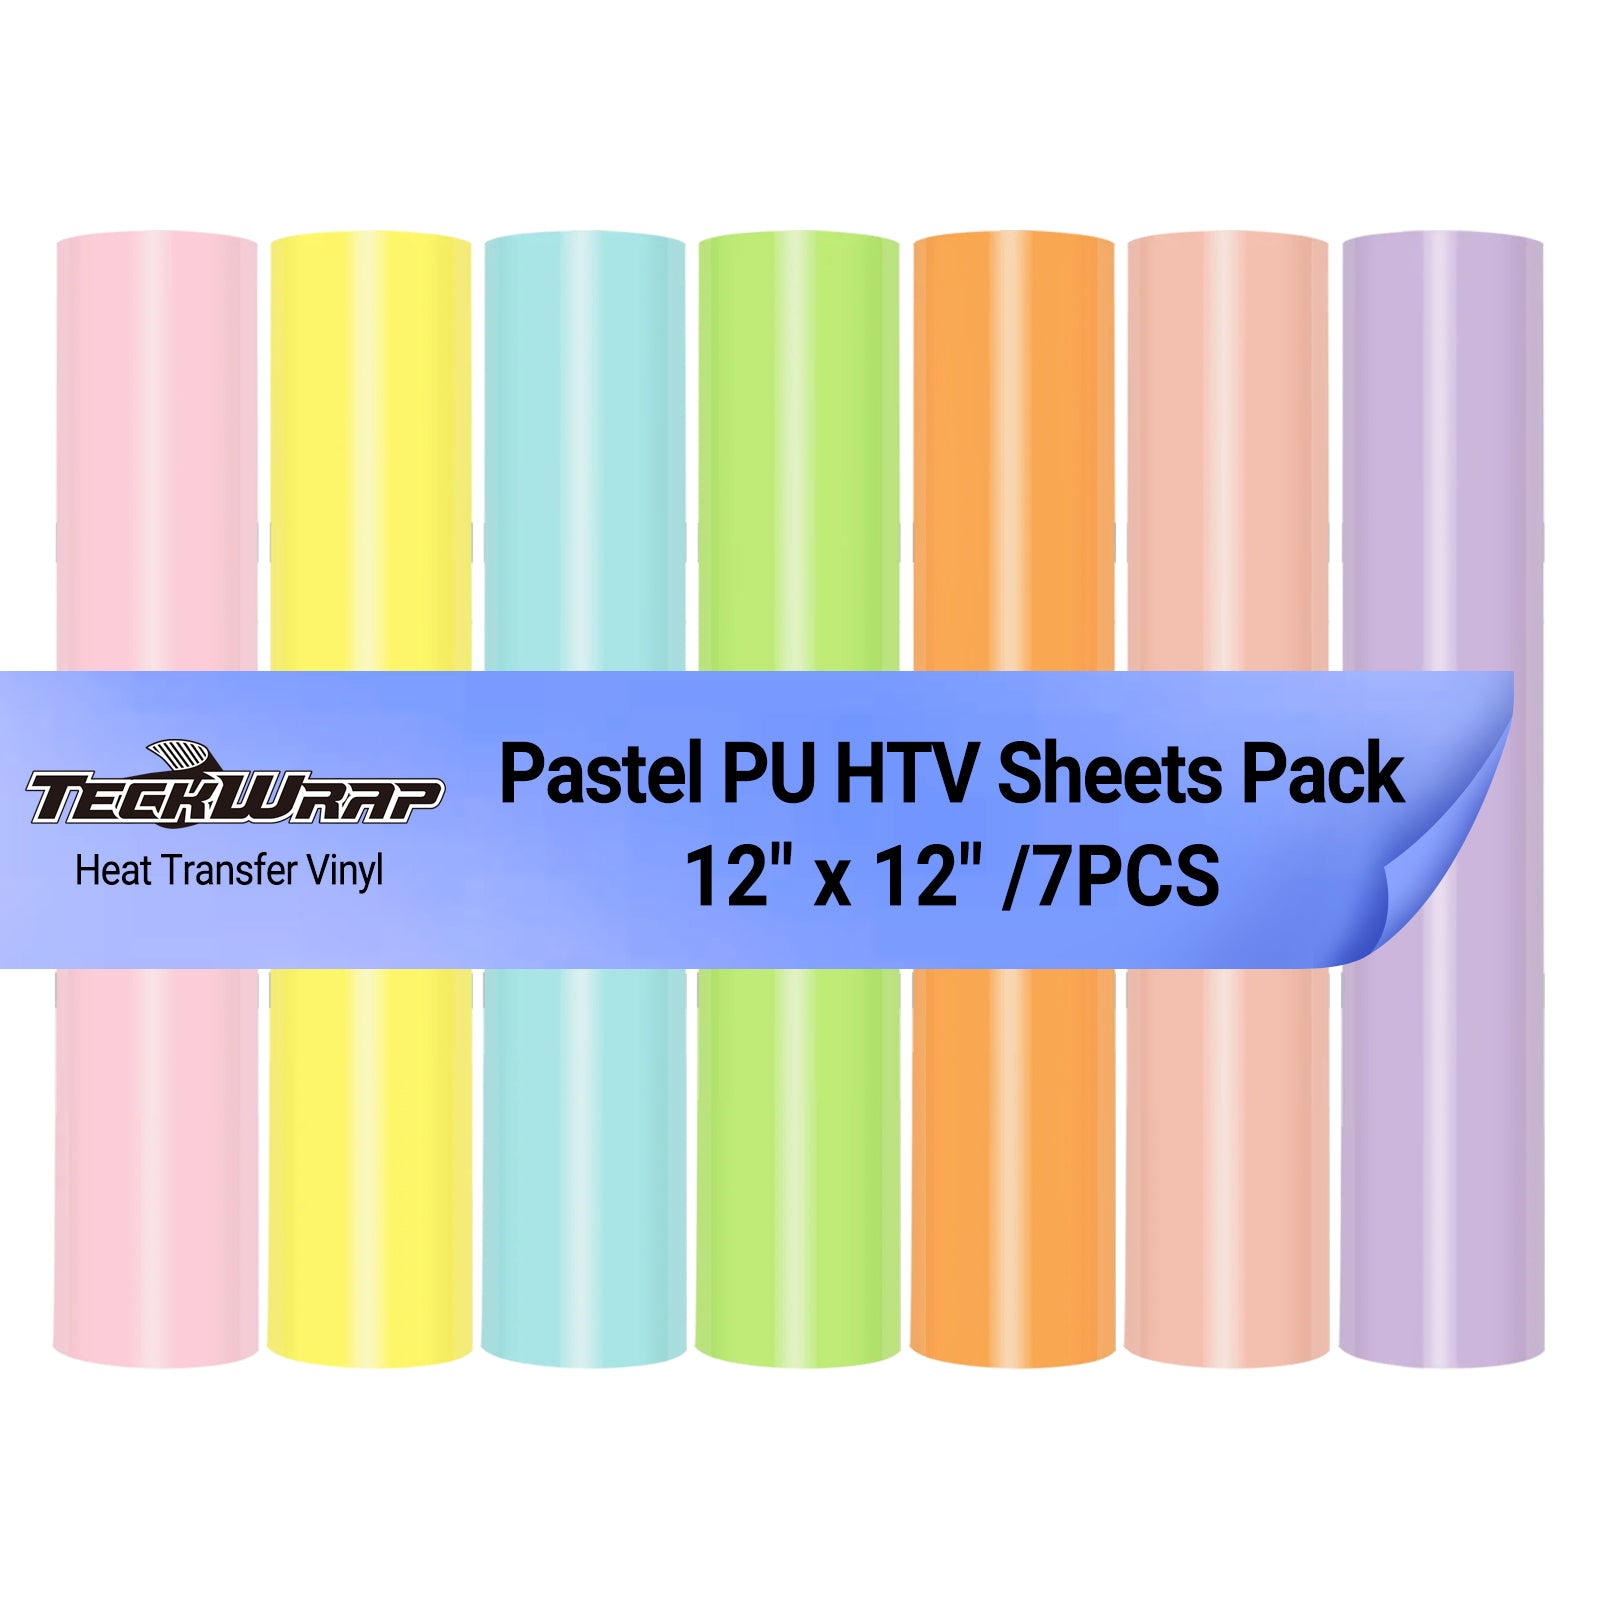 Pastel PU HTV Sheets Pack (7 PCS)